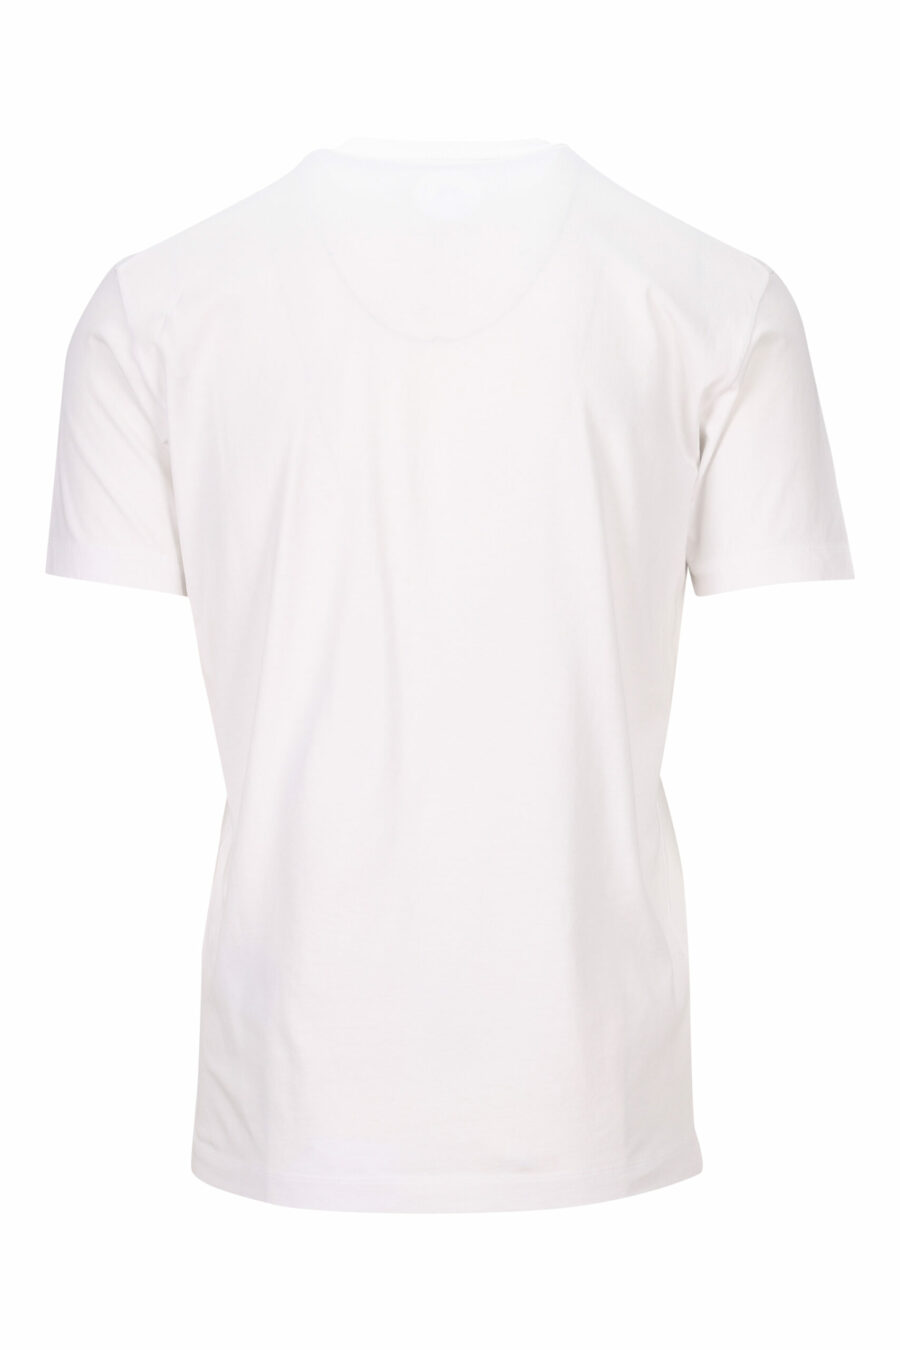 Camiseta blanca con minilogo "suburbans" negro - 8054148512842 1 scaled